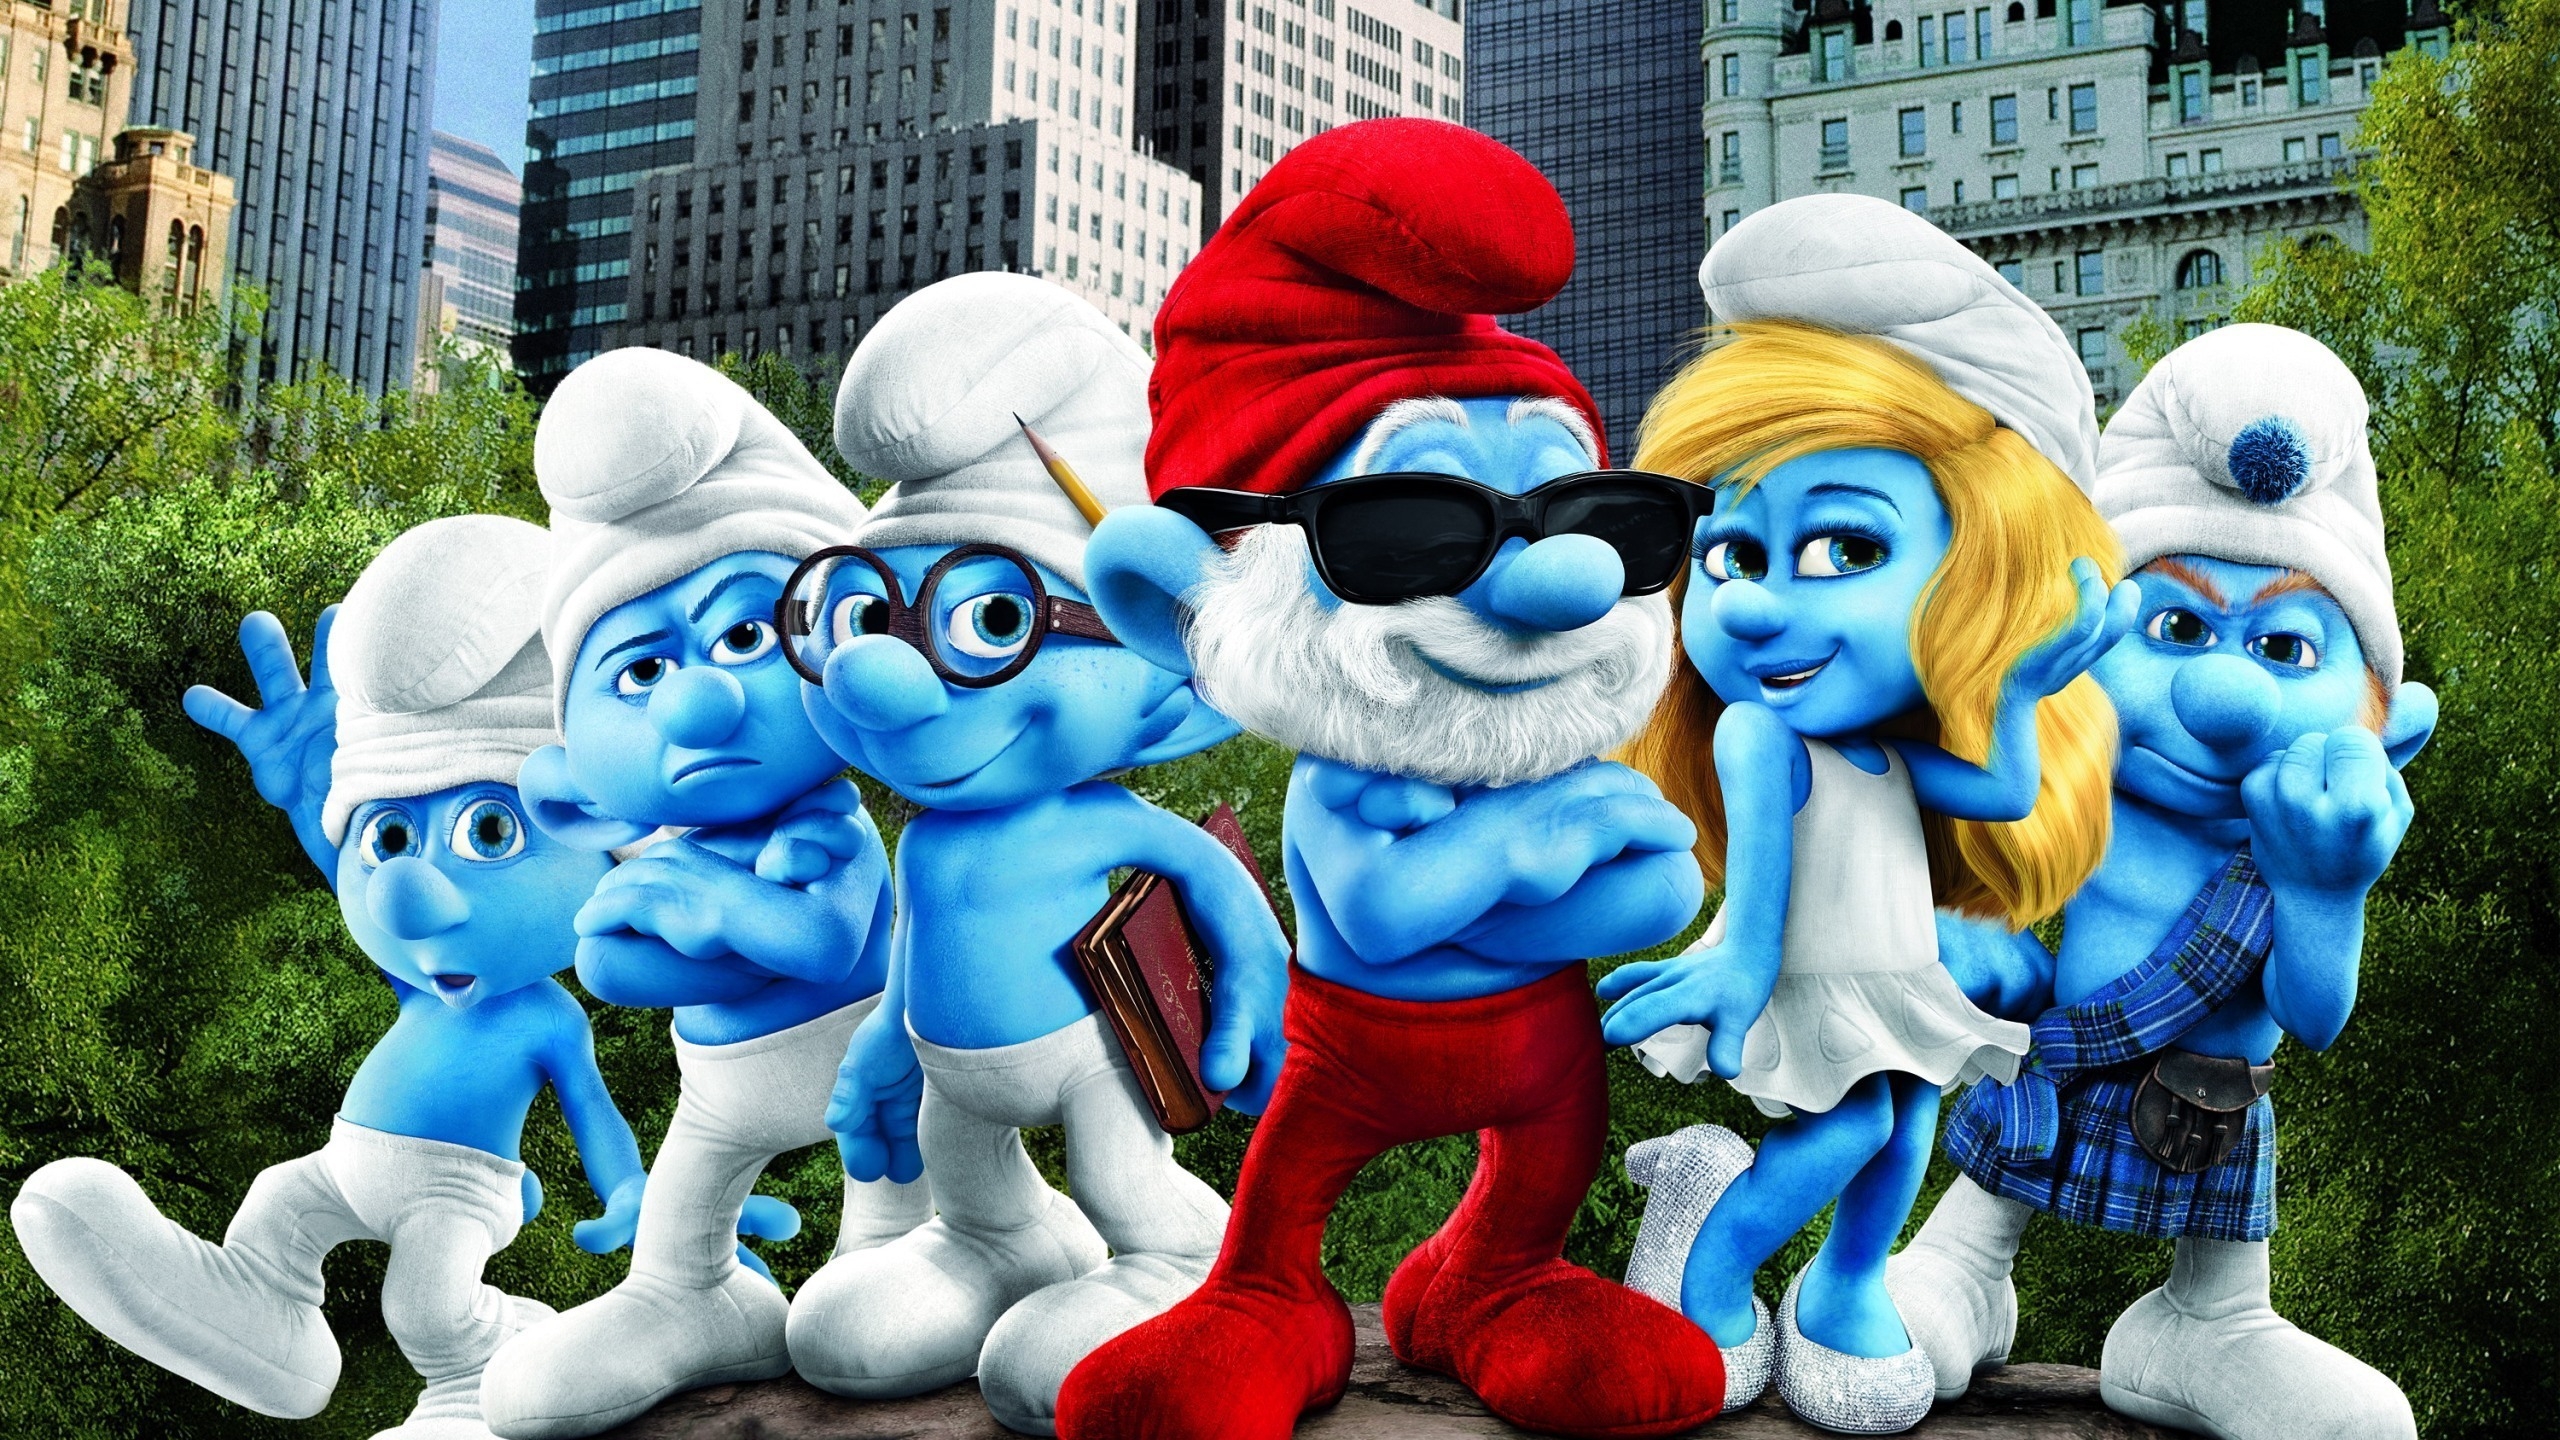 Smurfs Movie for 2560x1440 HDTV resolution